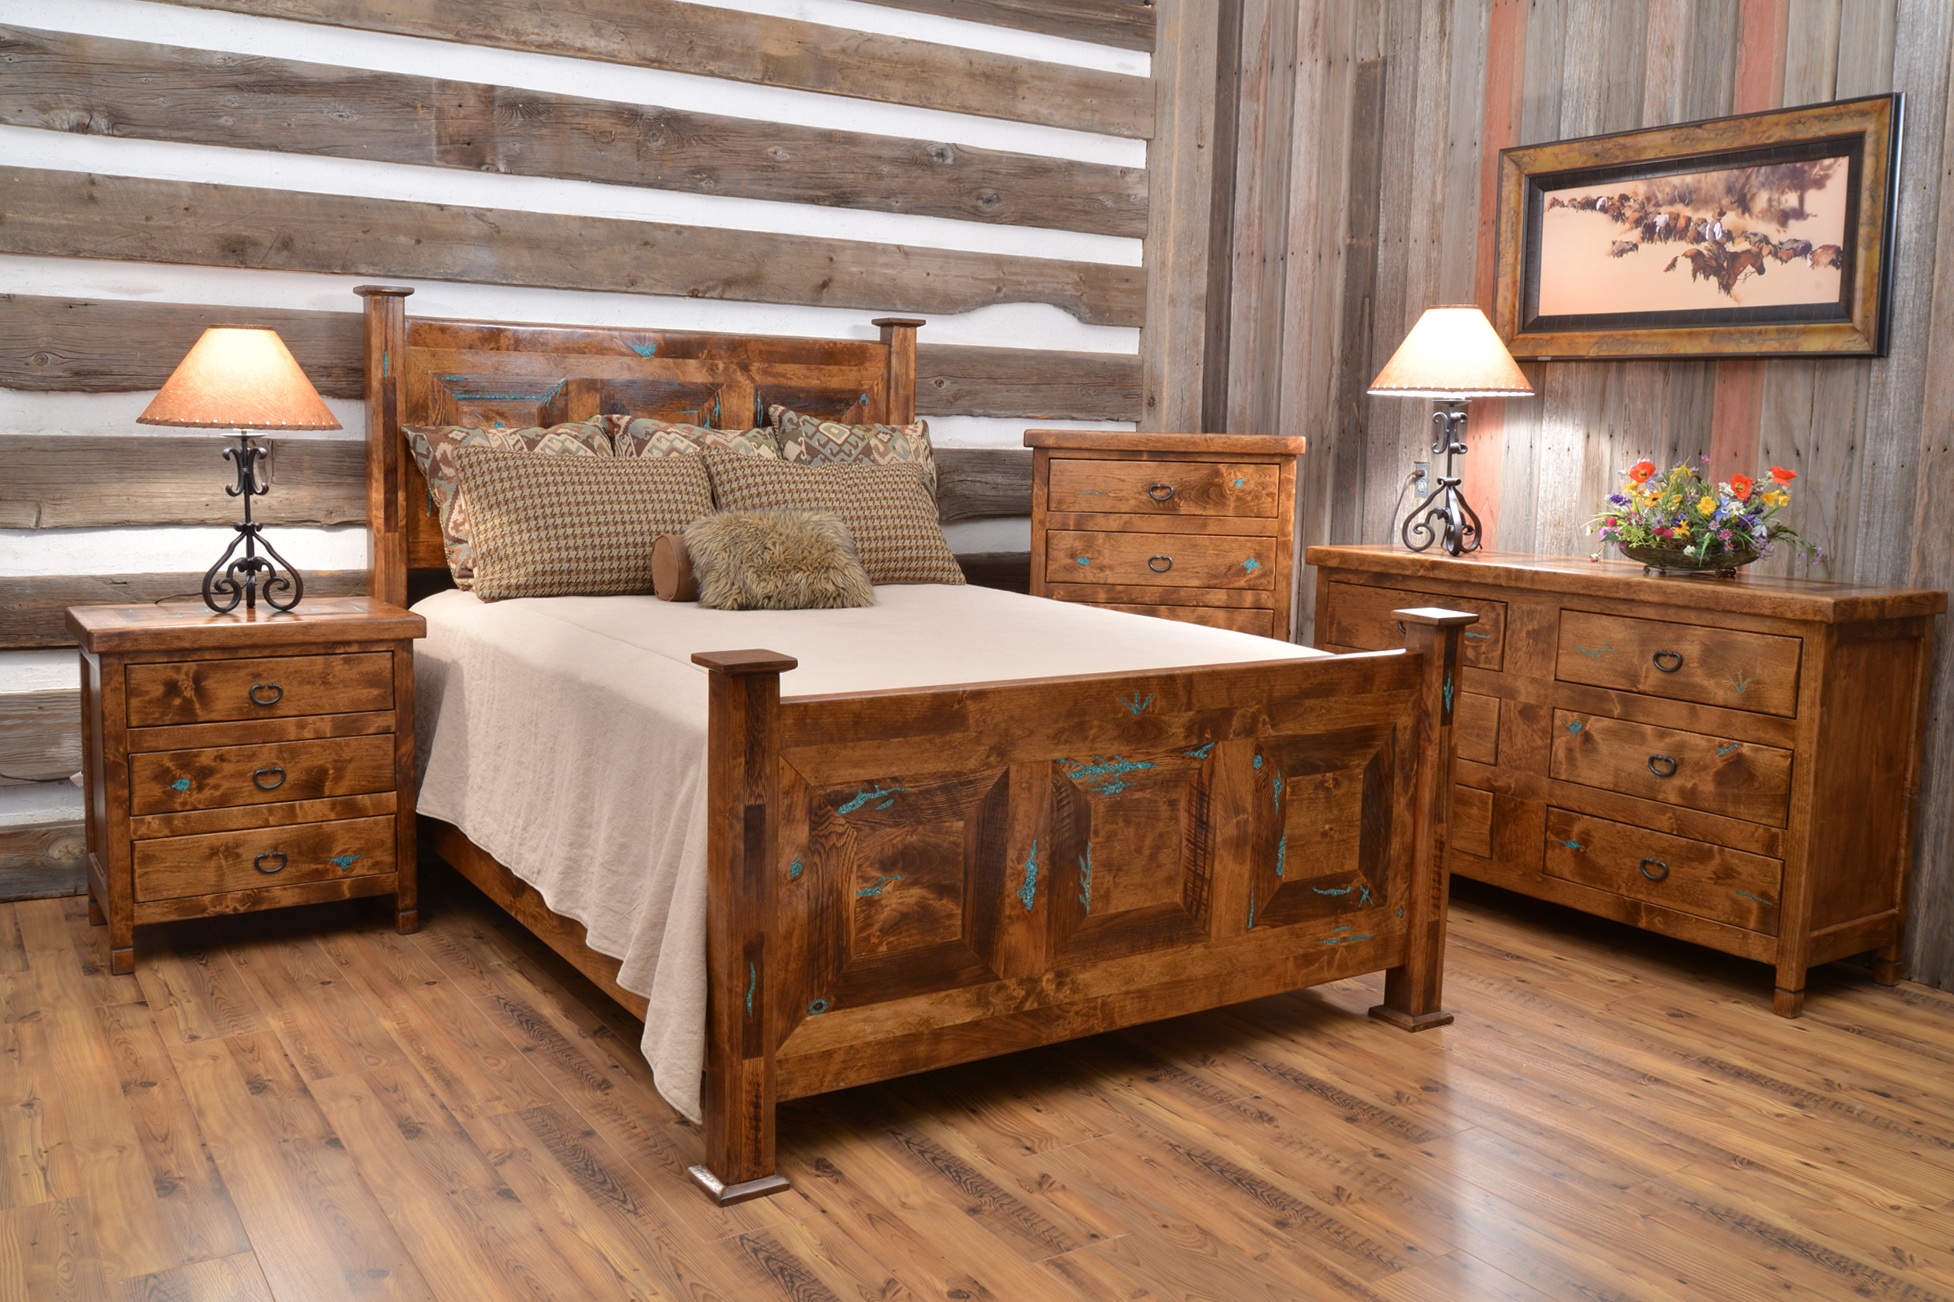  Turquoise Rustic Bedroom Furniture  Home Design Ideas